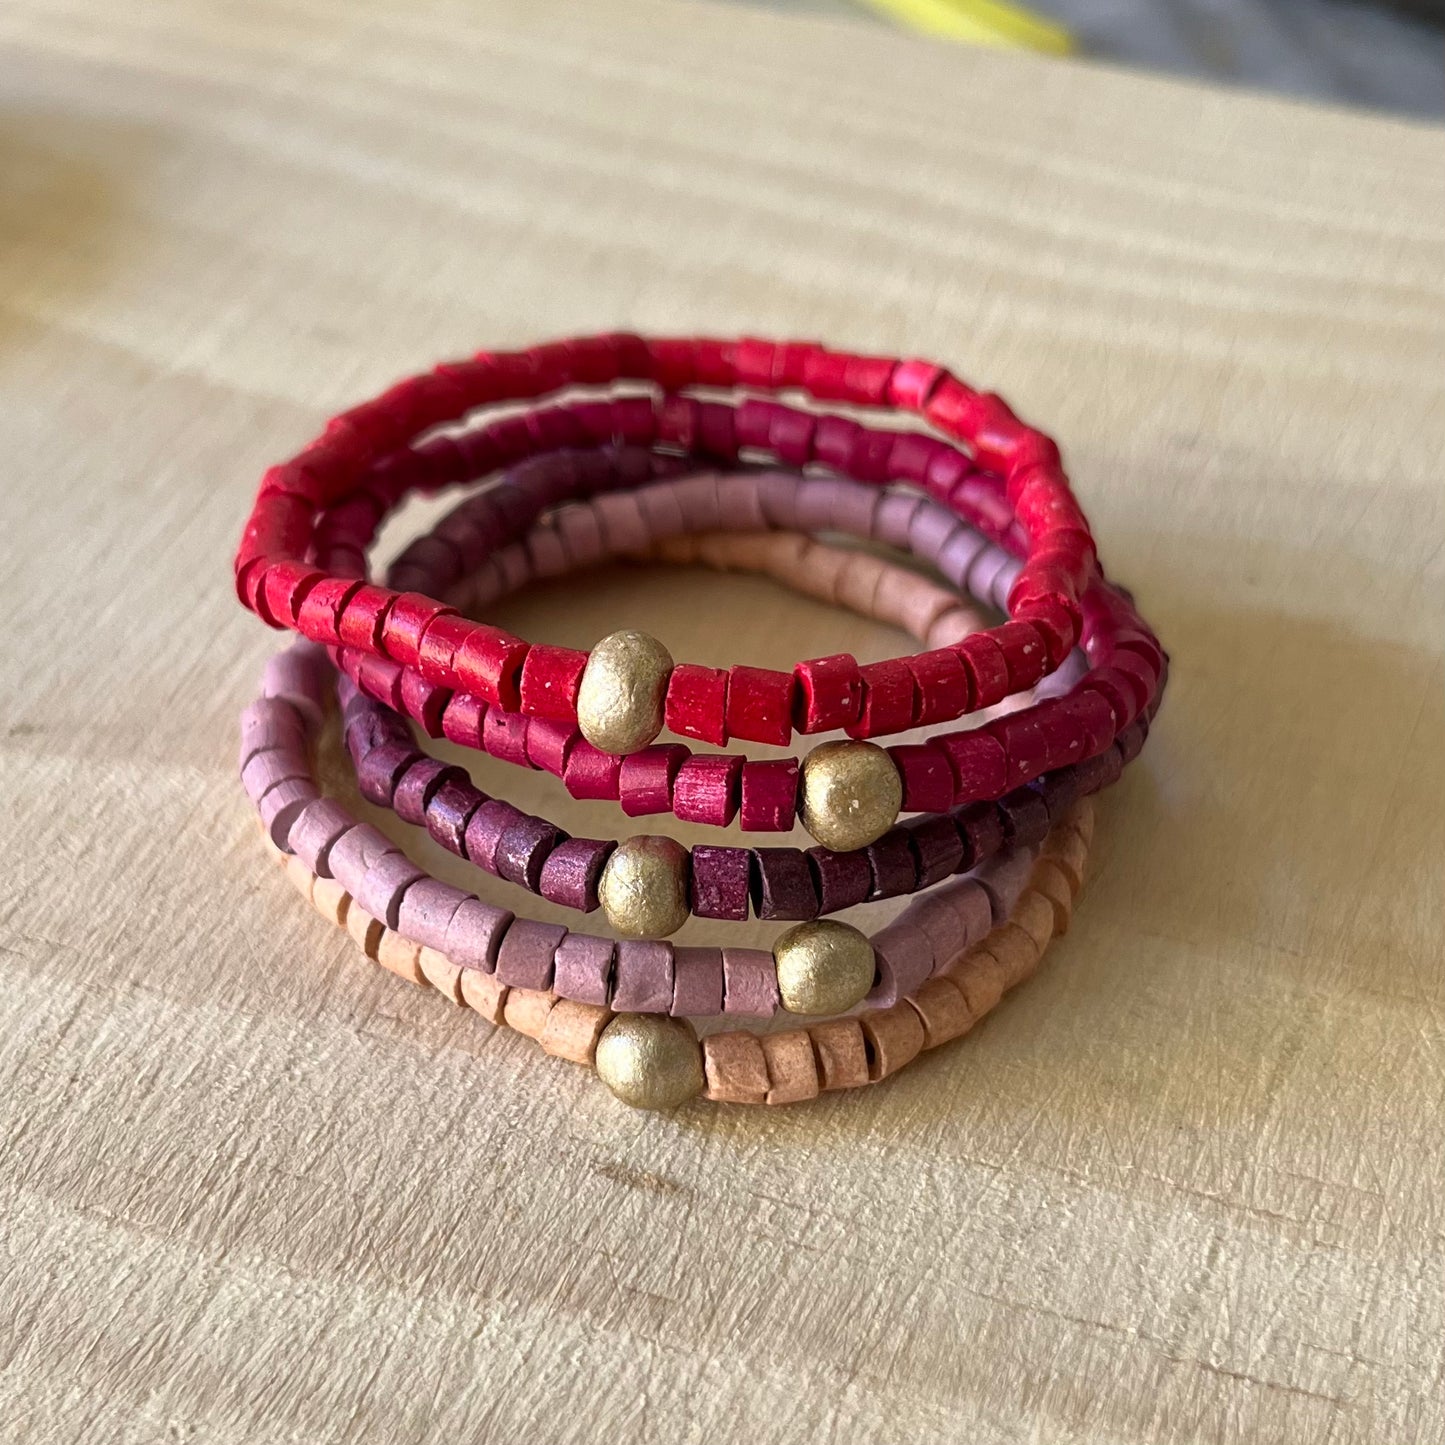 Clay beaded bracelets, elastic - "Solidarity Pack"